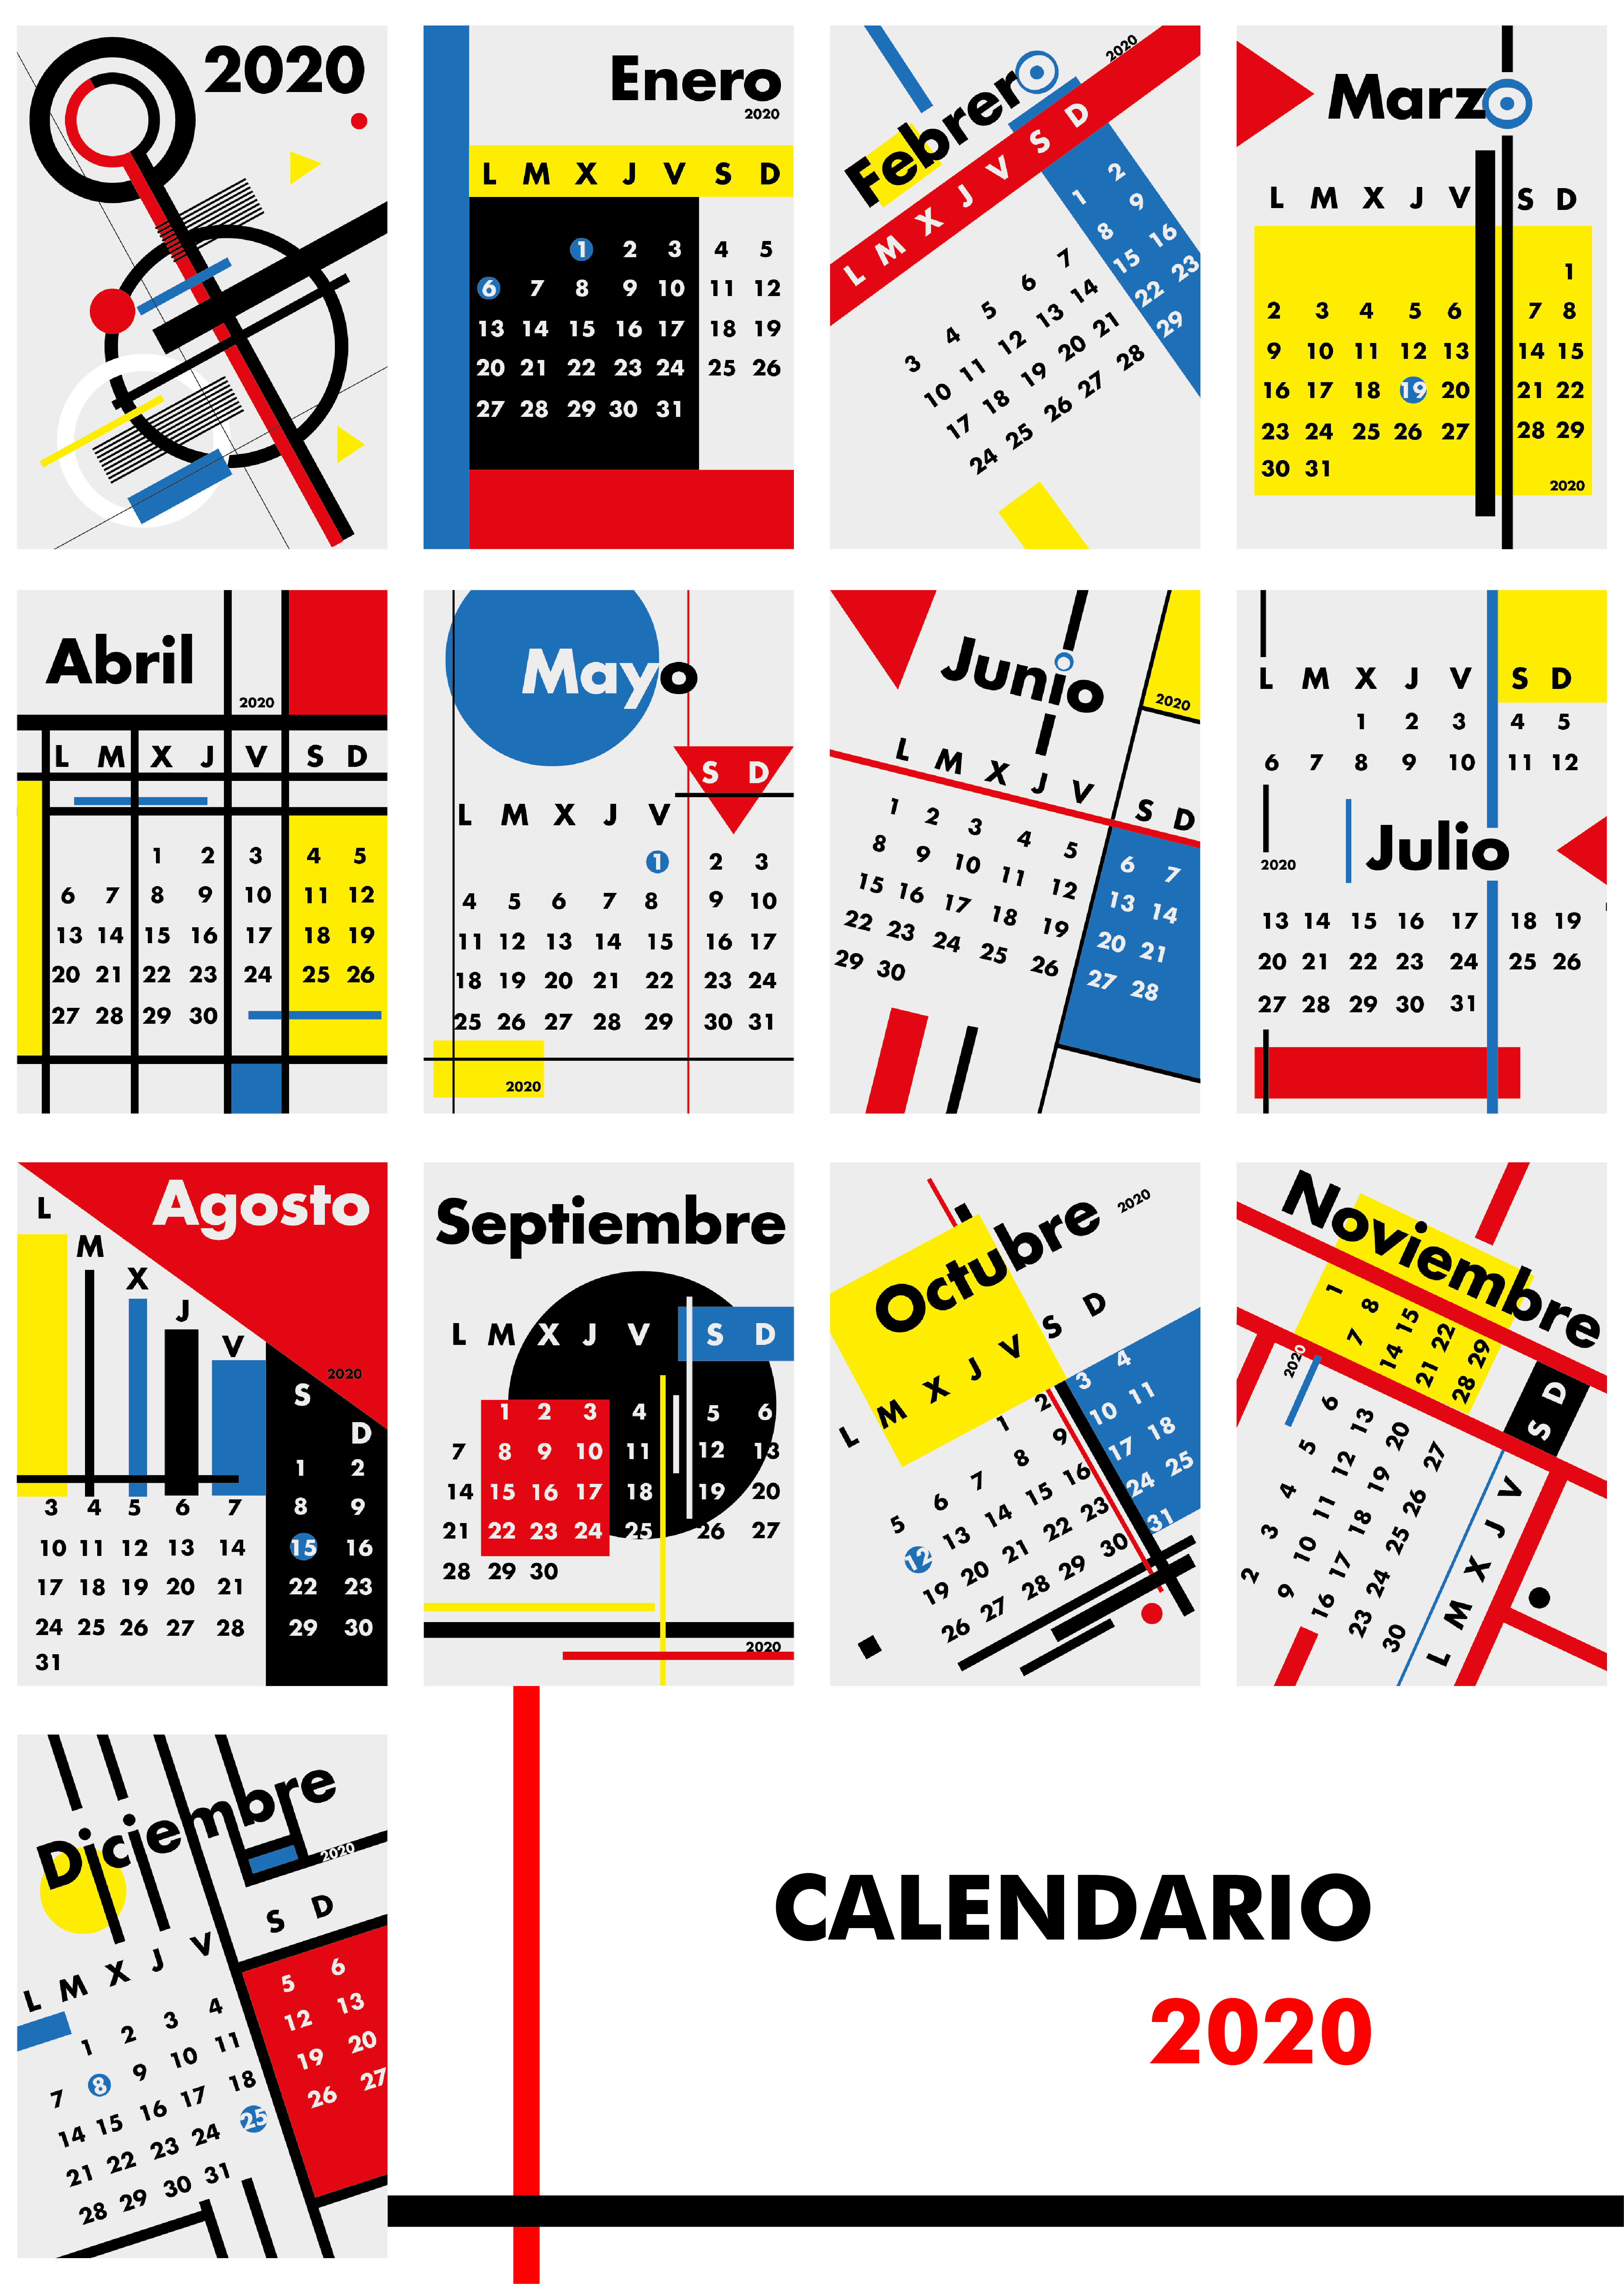 Calendario 2020 by Raquel Castañeda Gelabert - Creative Work